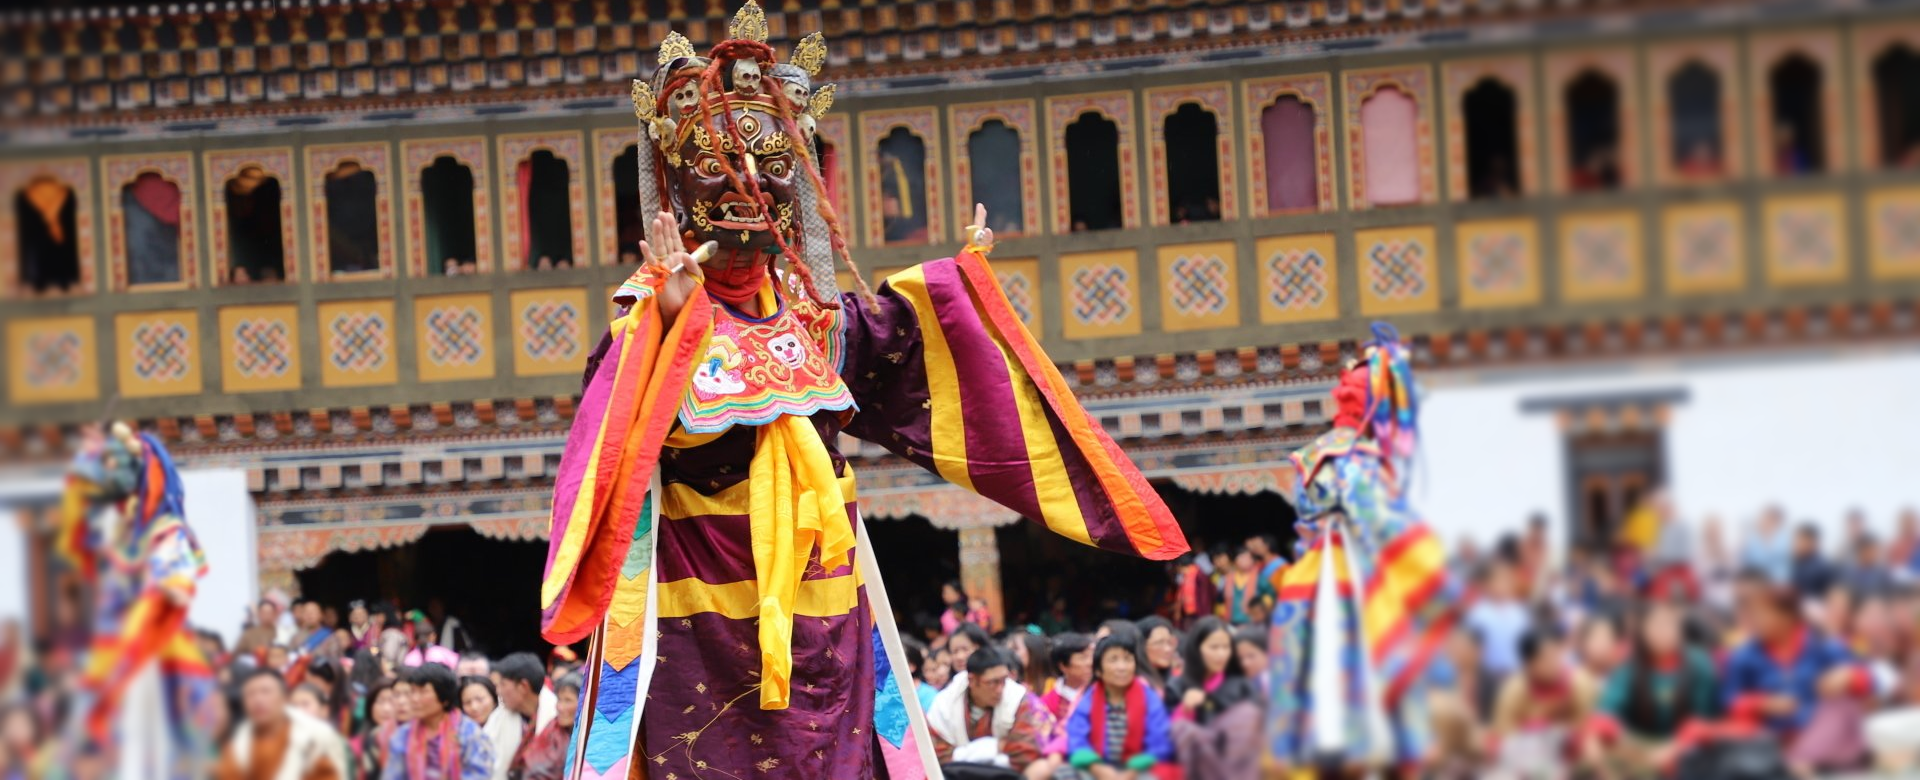 Festivals of Bhutan, Thimphu Festival